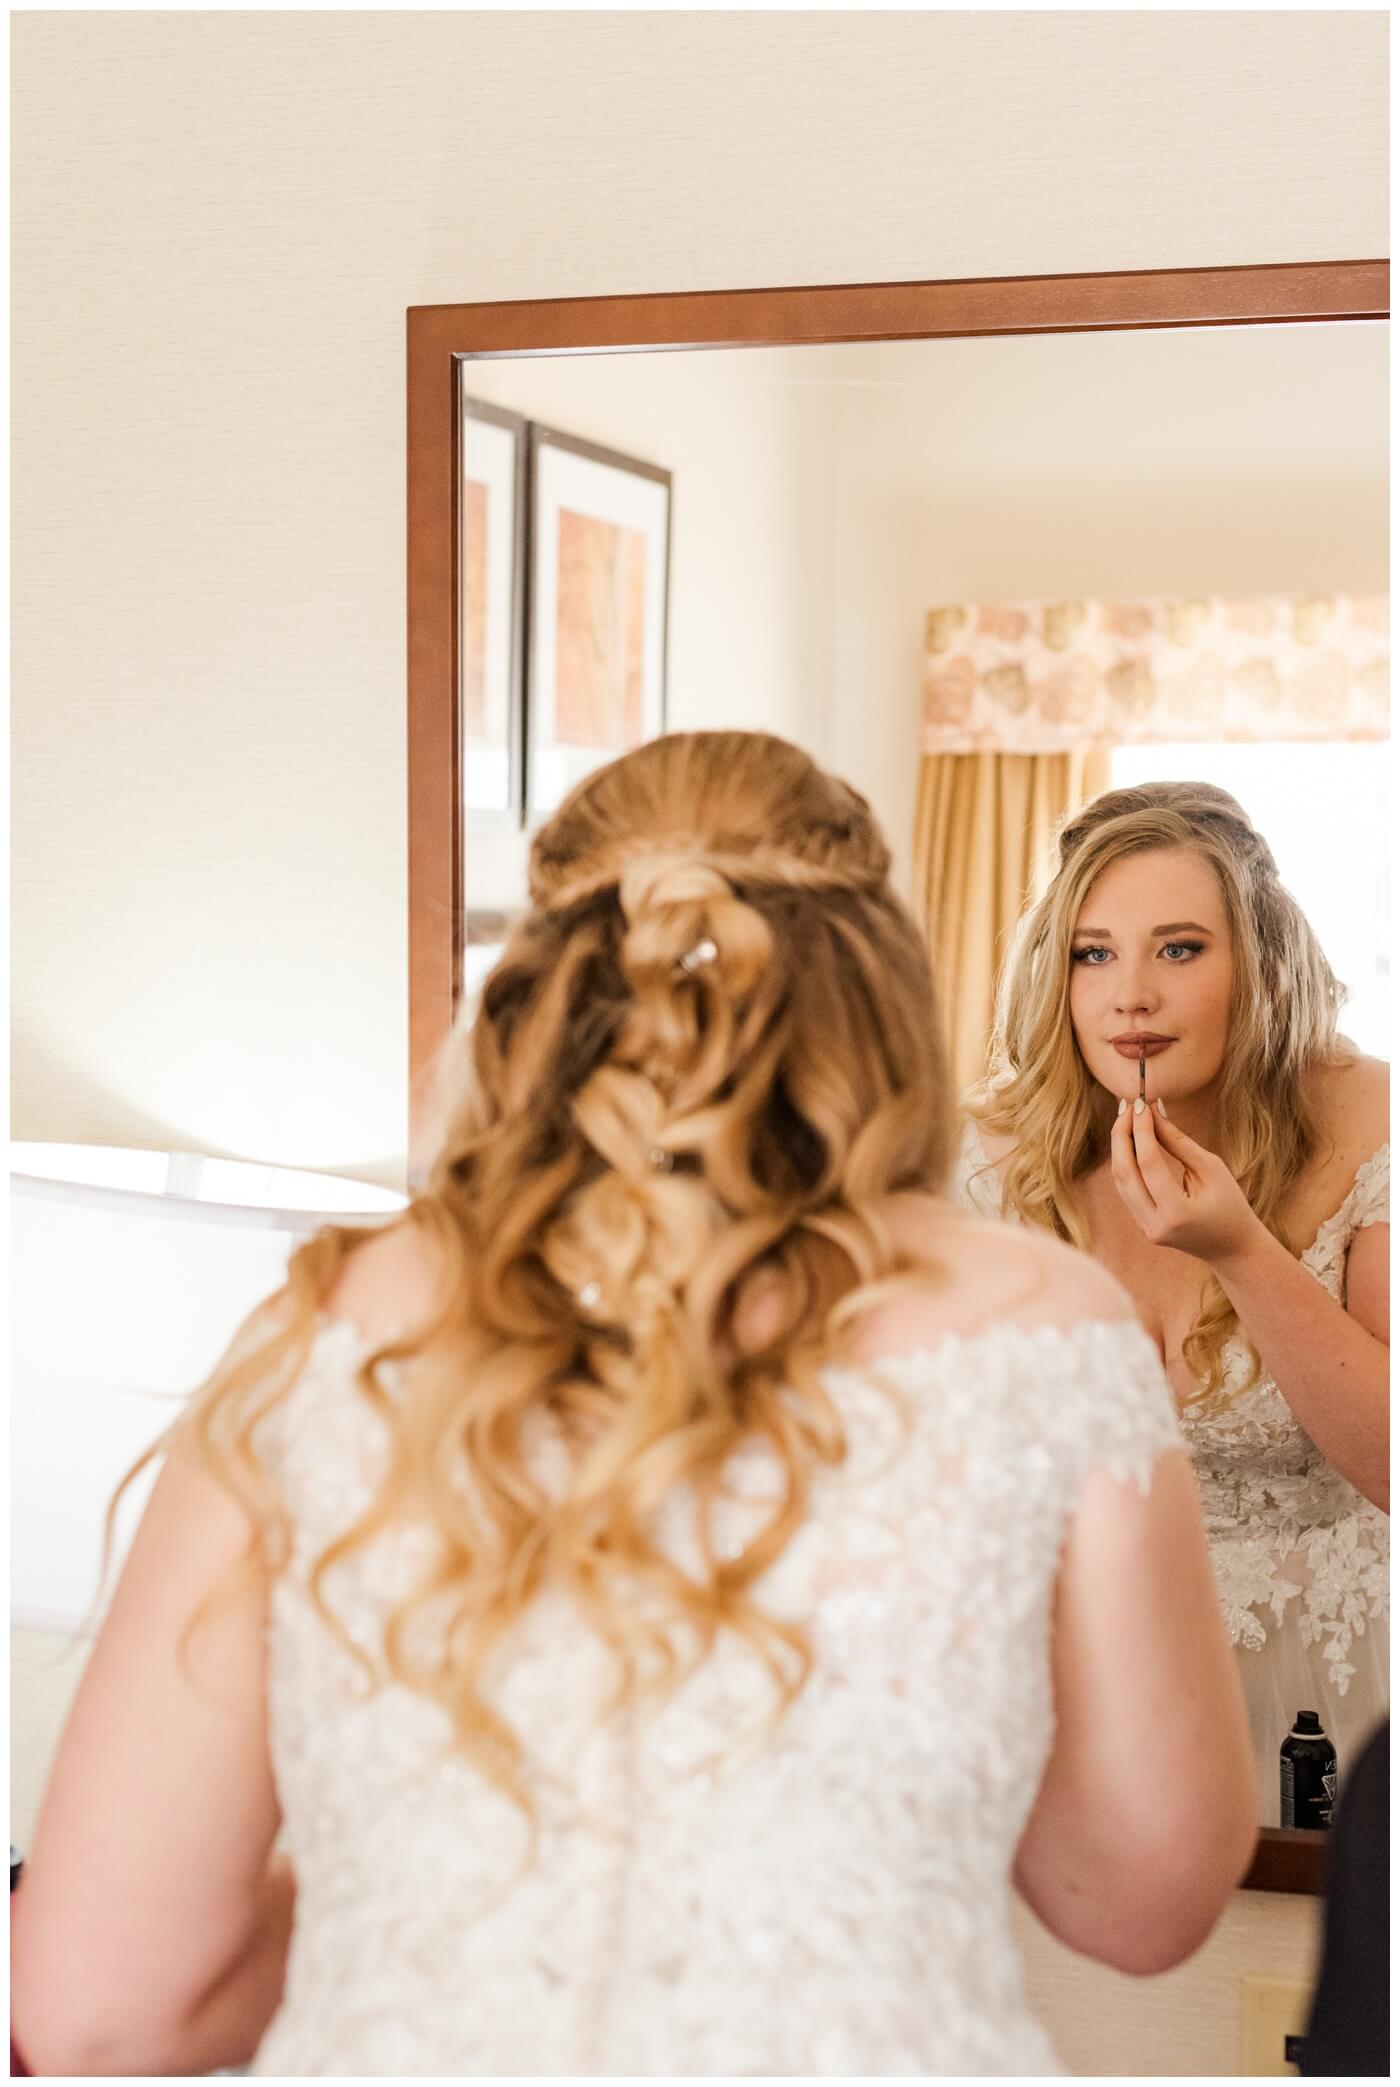 Orrin & Jade - 11 - Weyburn Wedding - Bride applies her lipstick in the mirror